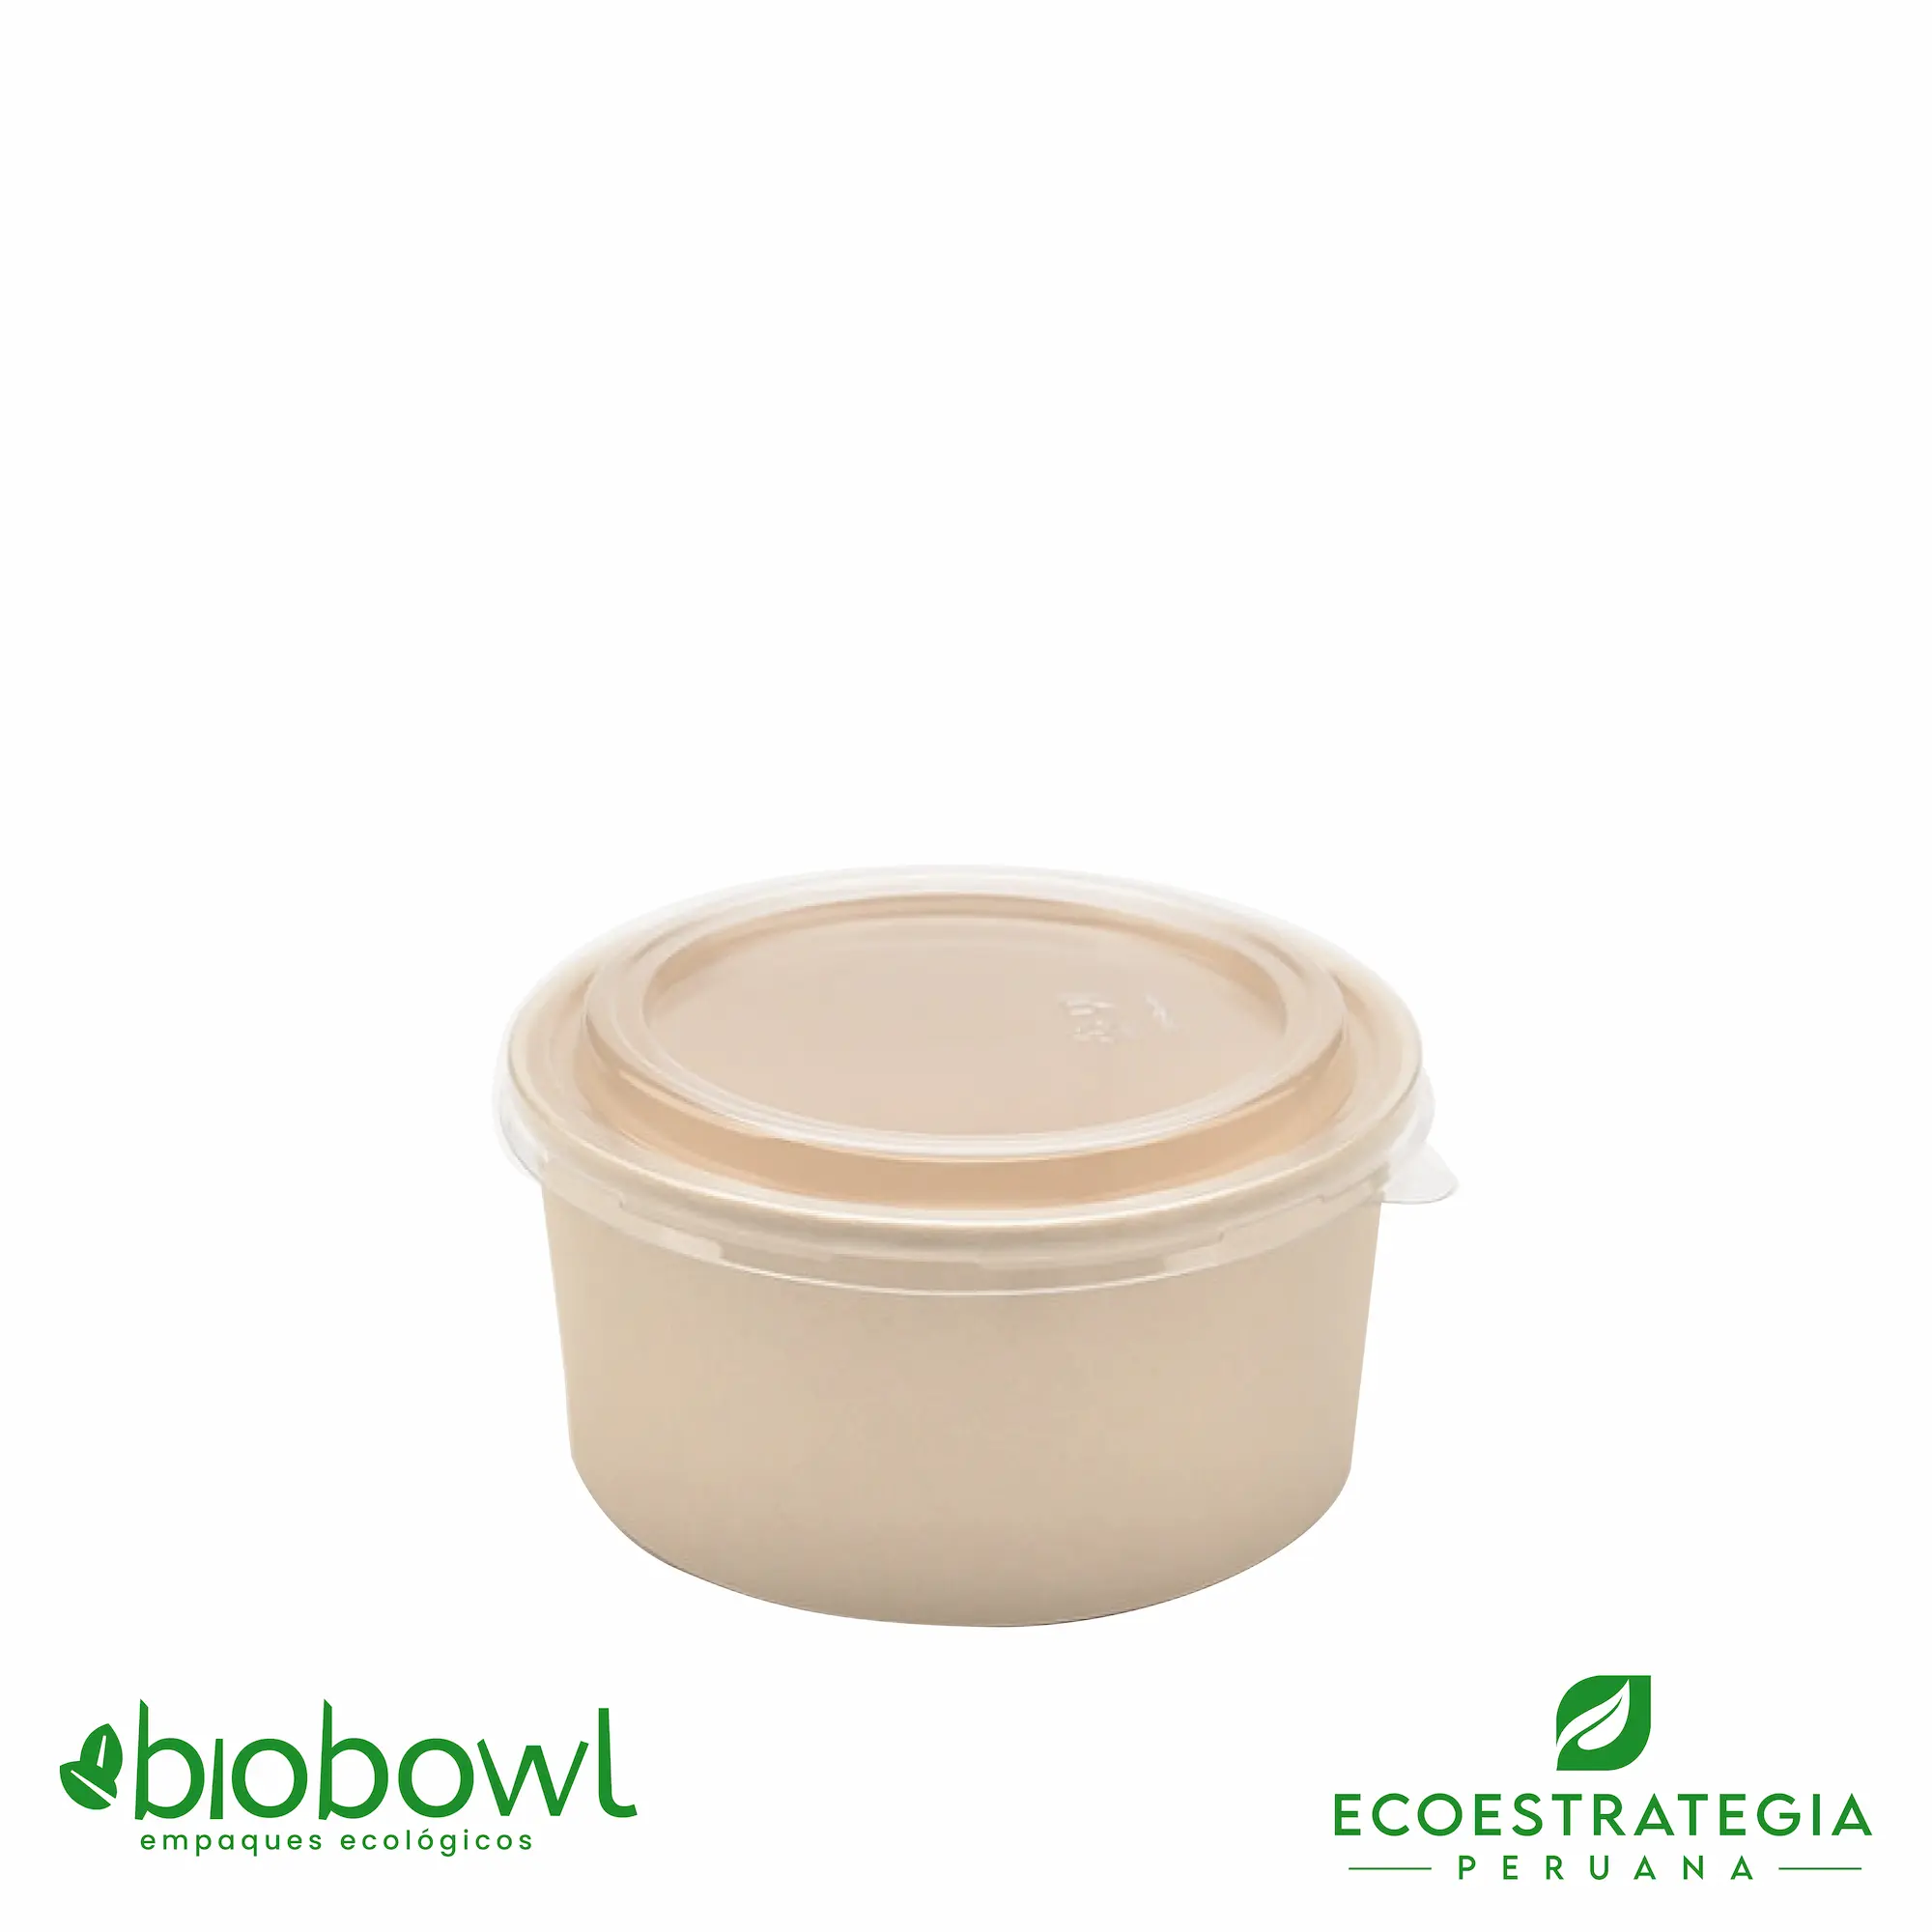 Esta bowl biodegradable de 330 ml es a base de fibra de bambu. Envases descartables con gramaje ideal, cotiza tus empaques, platos y tapers para alimentos